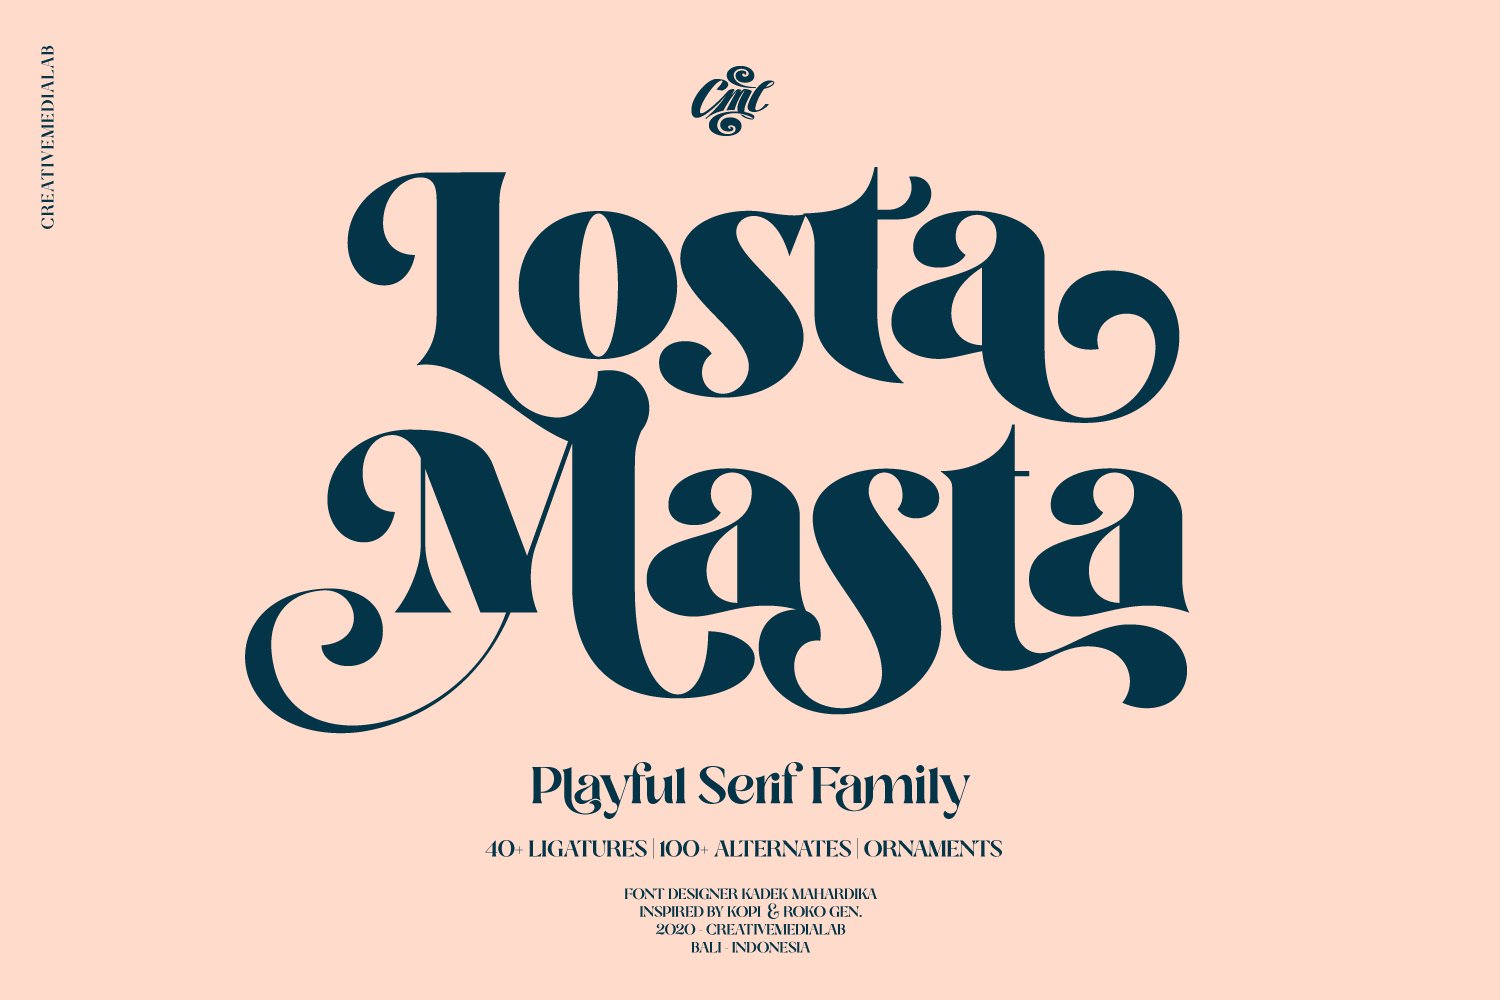 lostamasta vintage serif family 868